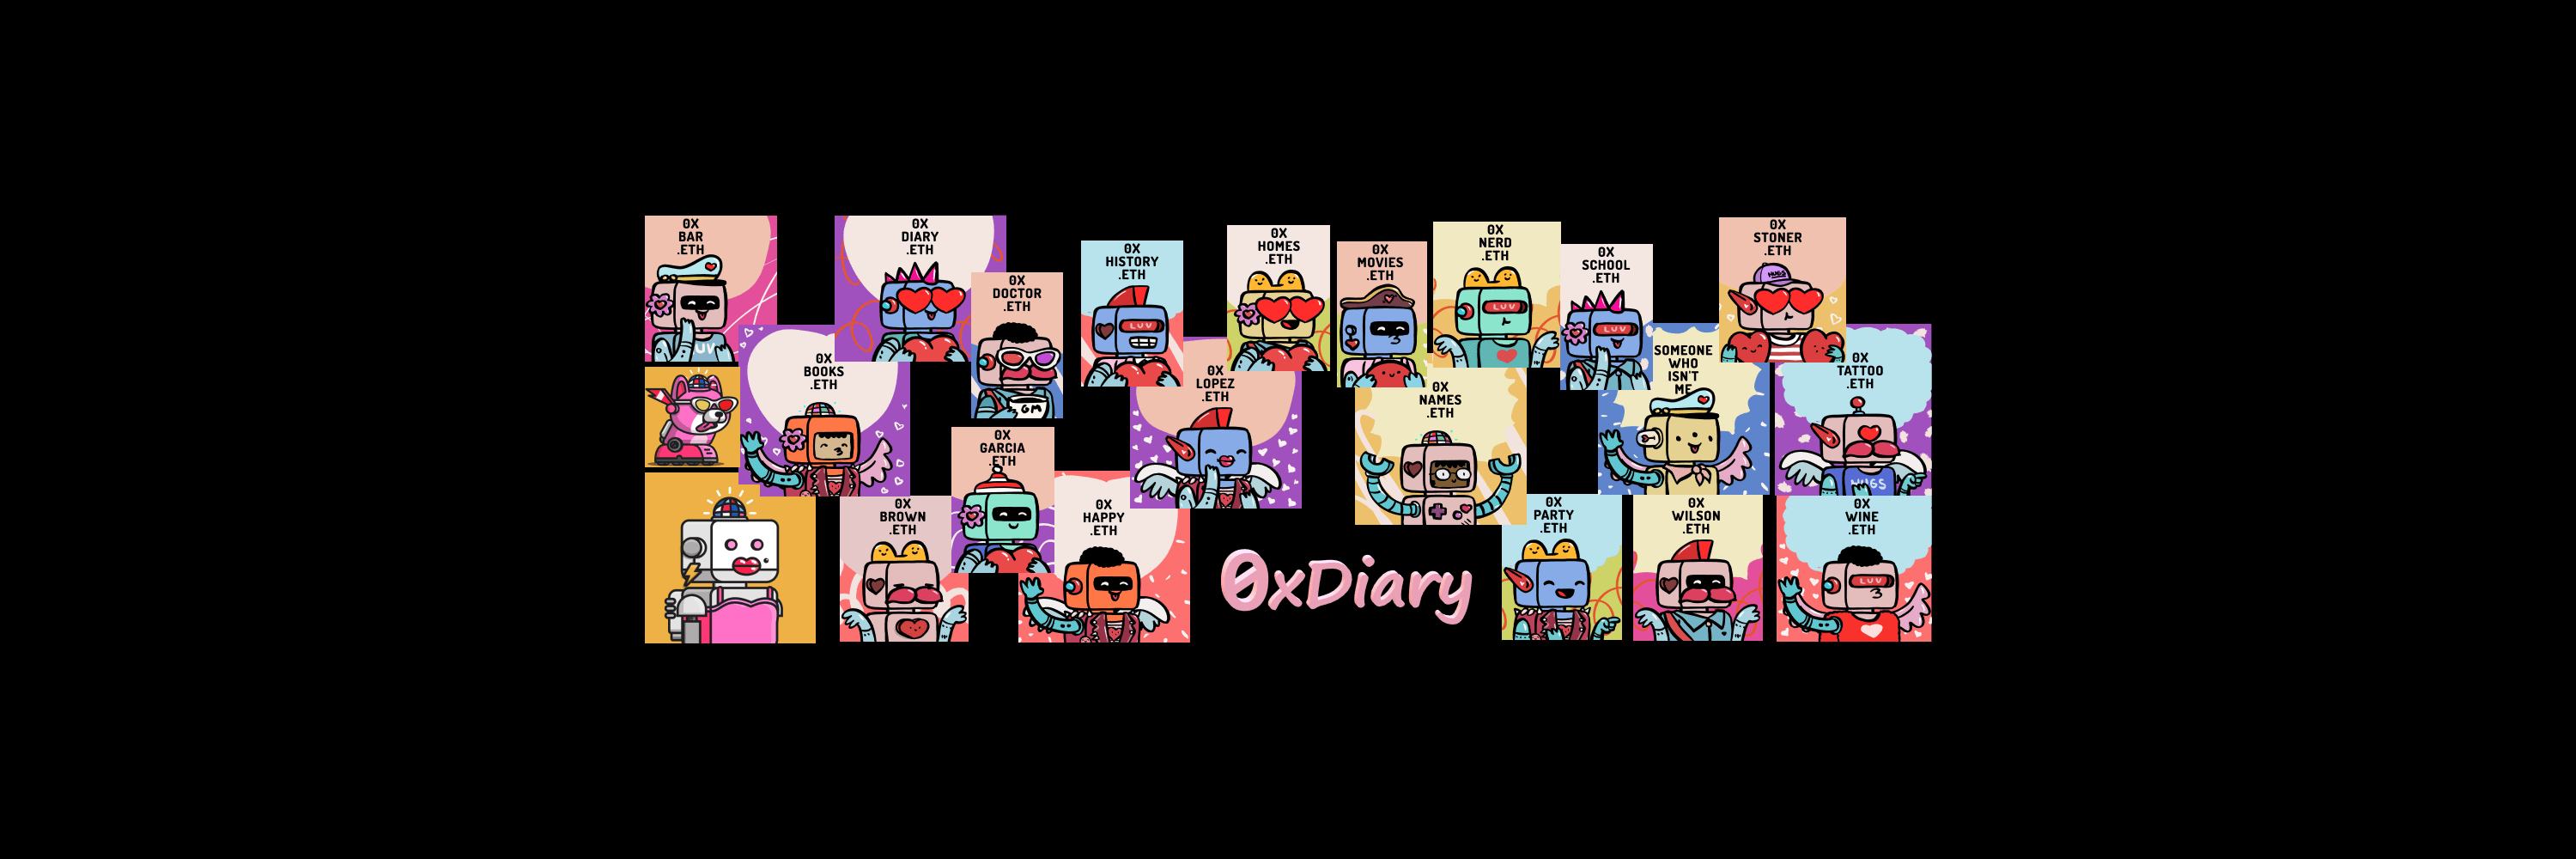 0xHappy-Lobby3 banner